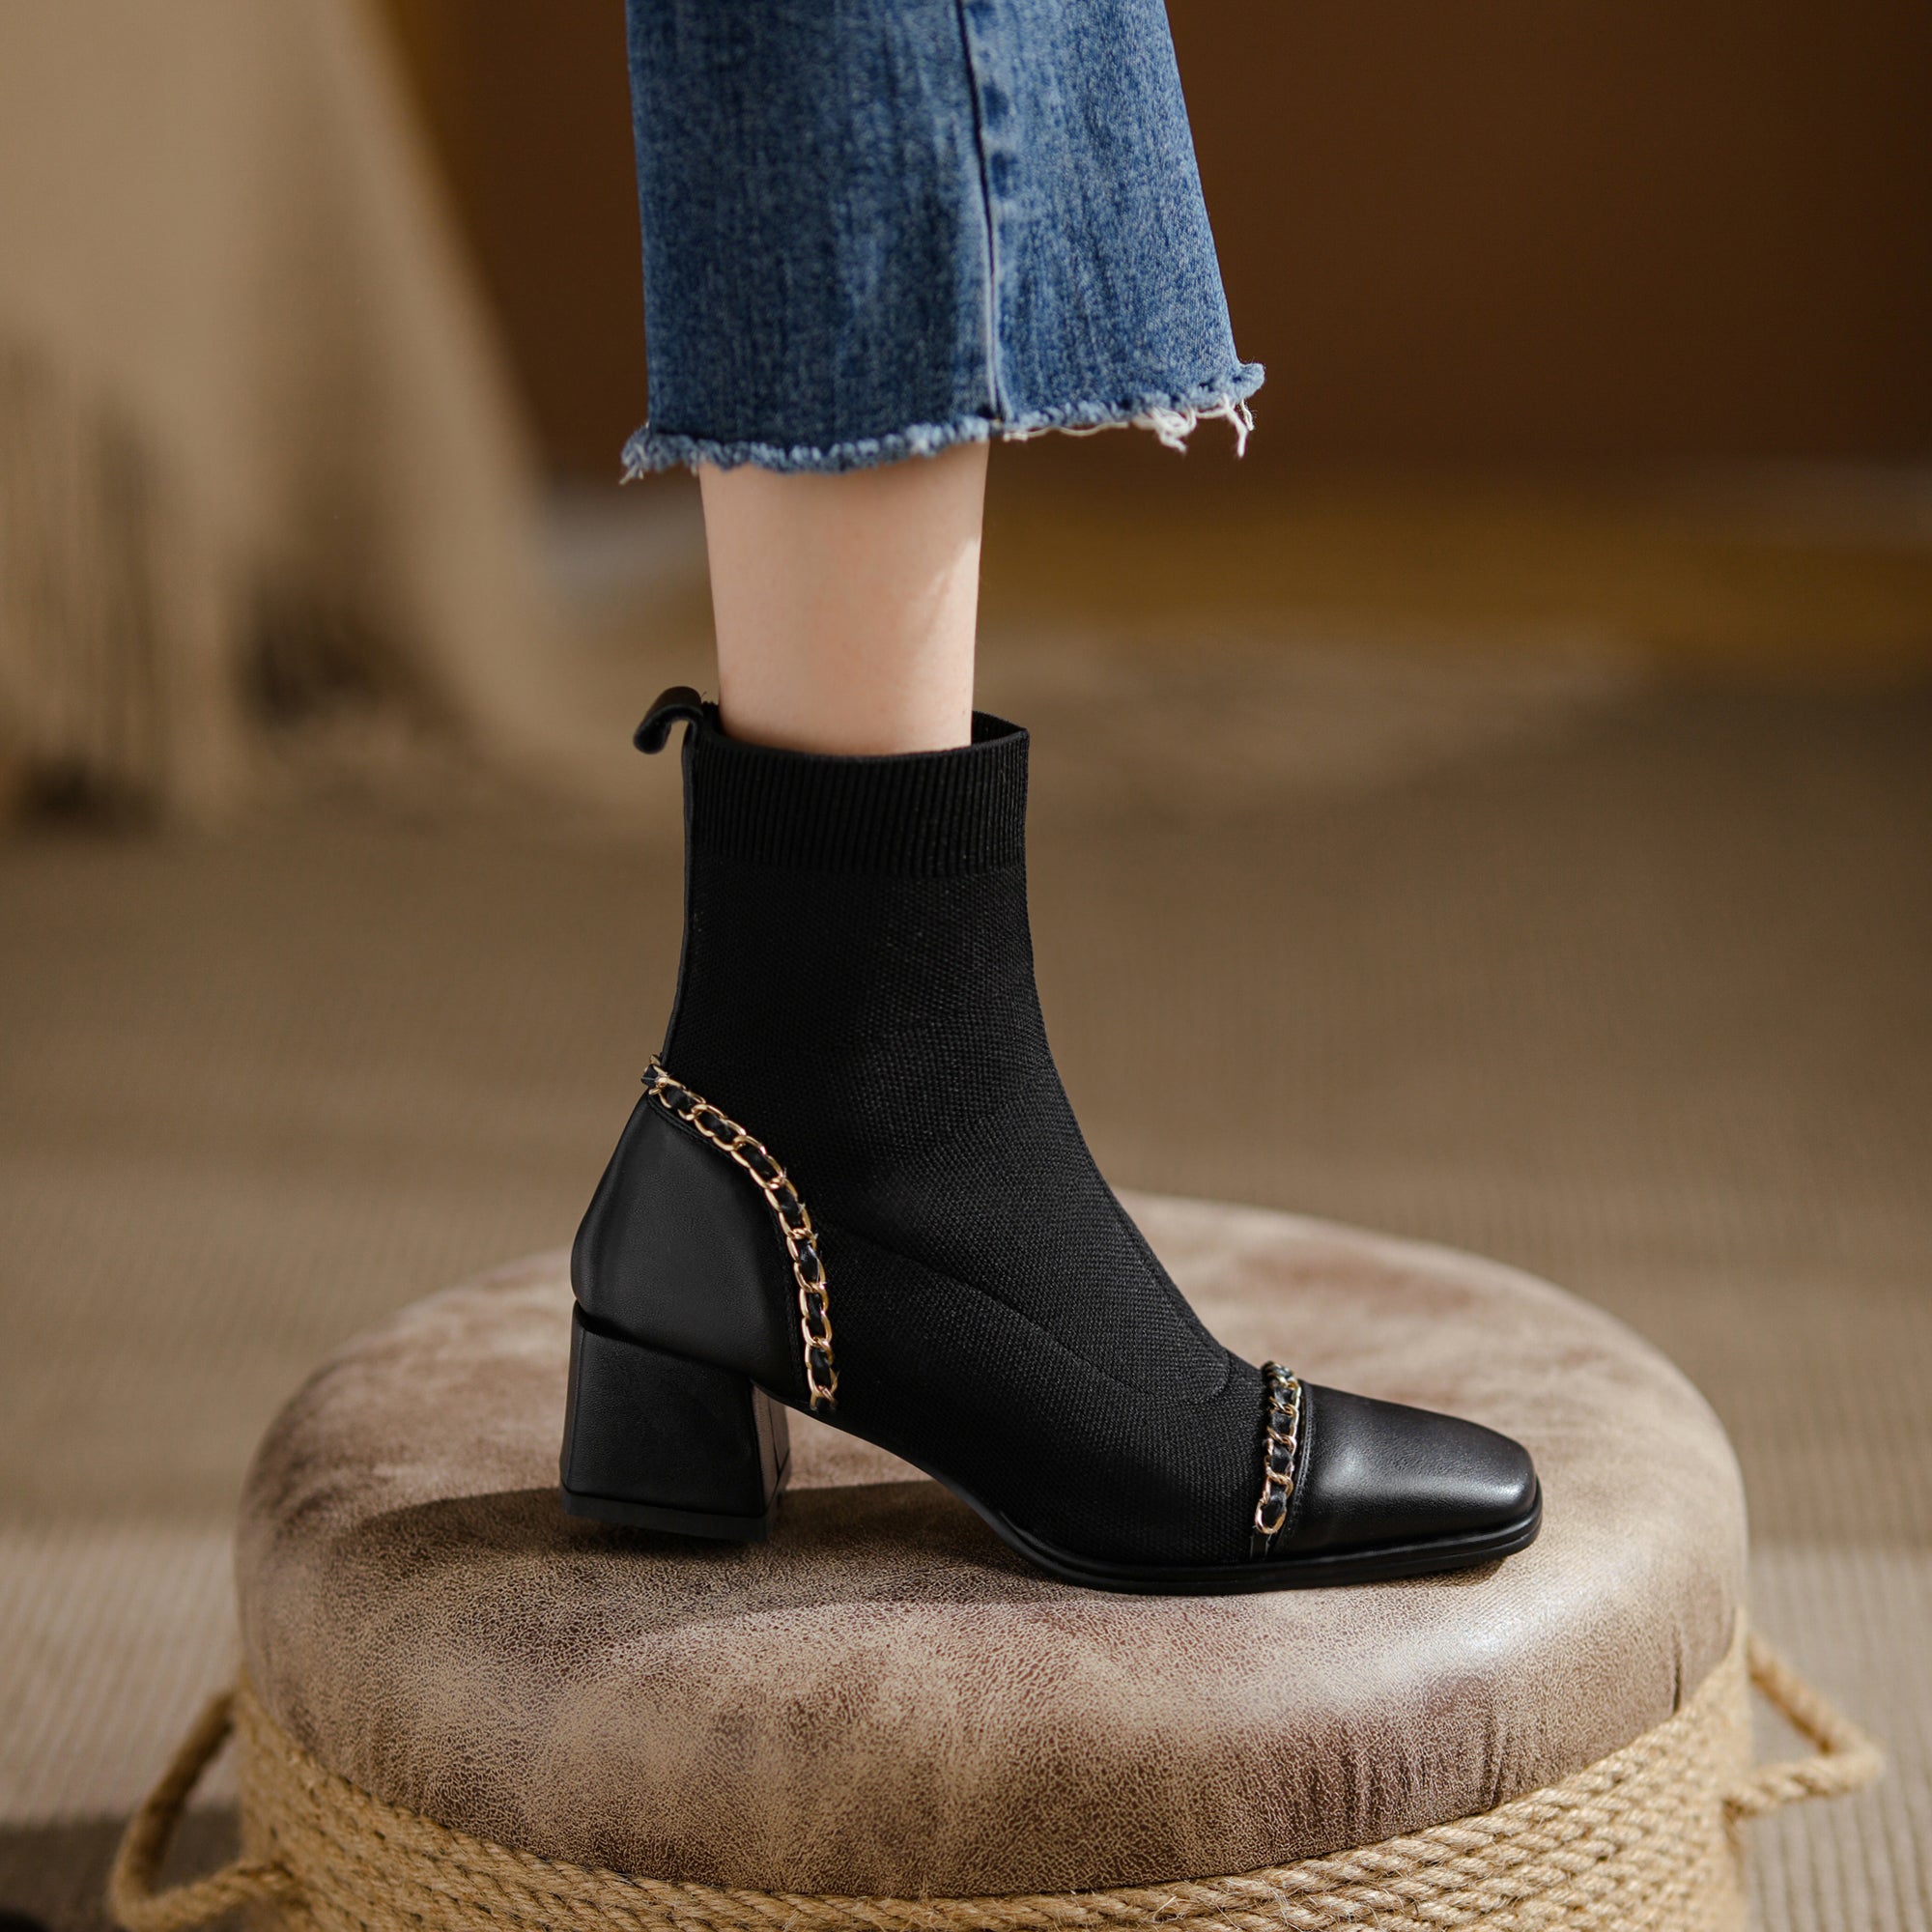 Bigsizeheels Square heel square toe stitching stretch ankle boots- Black freeshipping - bigsizeheel®-size5-size15 -All Plus Sizes Available!